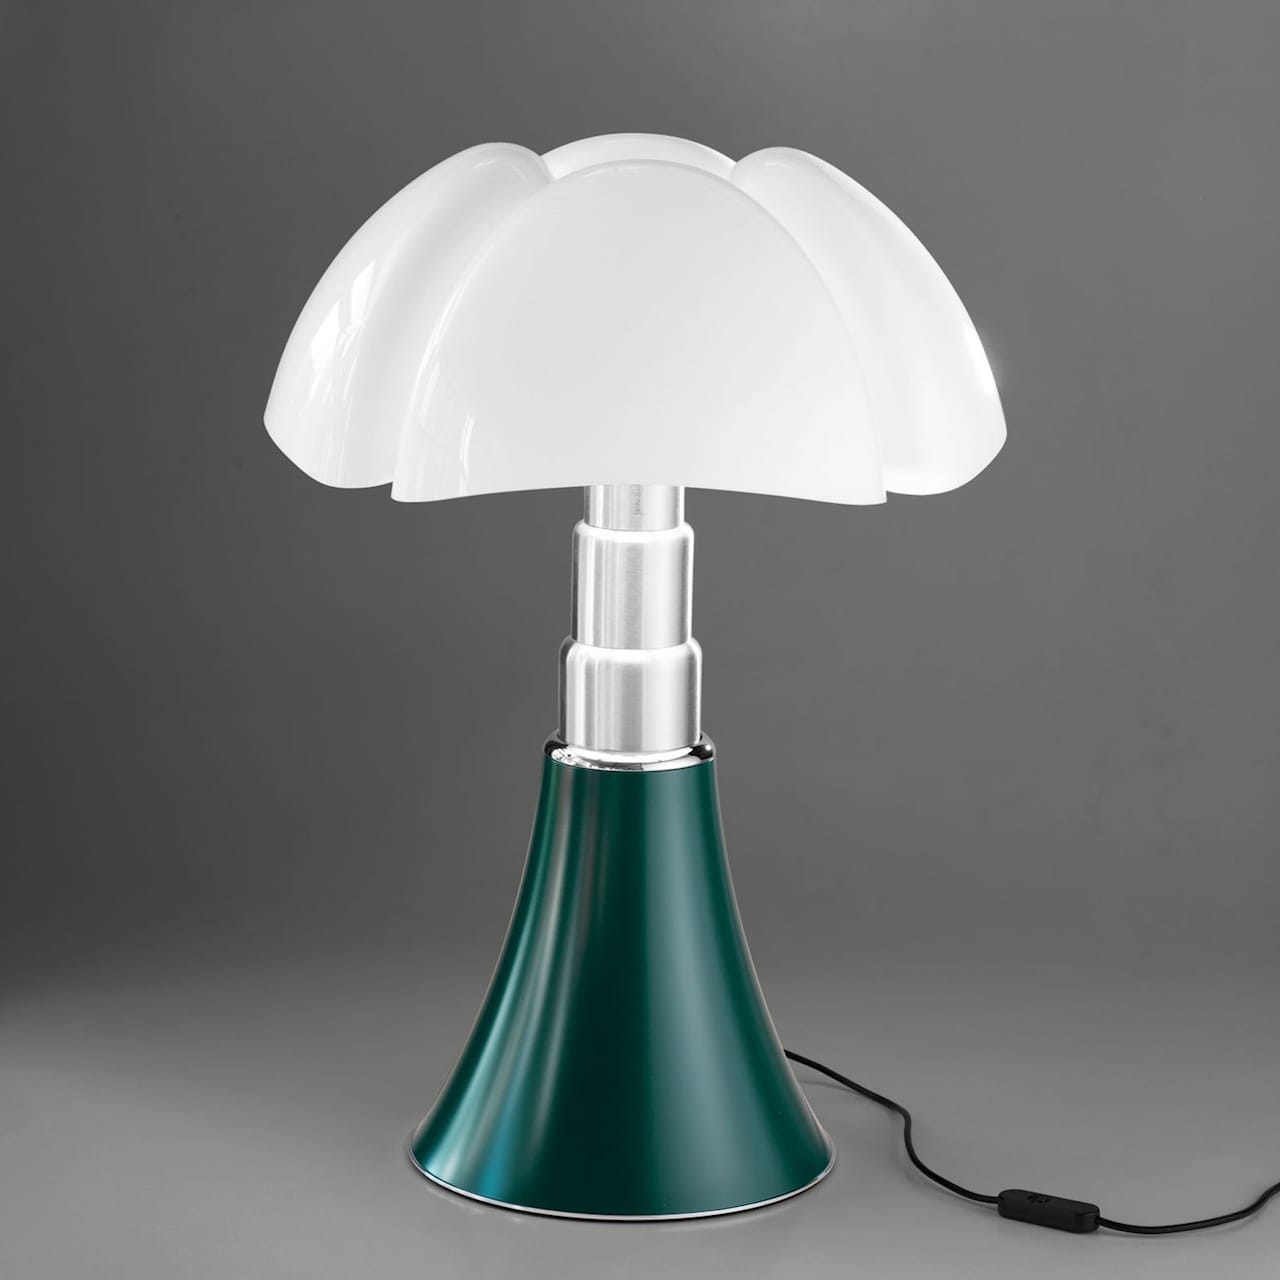 Pipistrello Table Lamp Agave Green - Non Dimmable